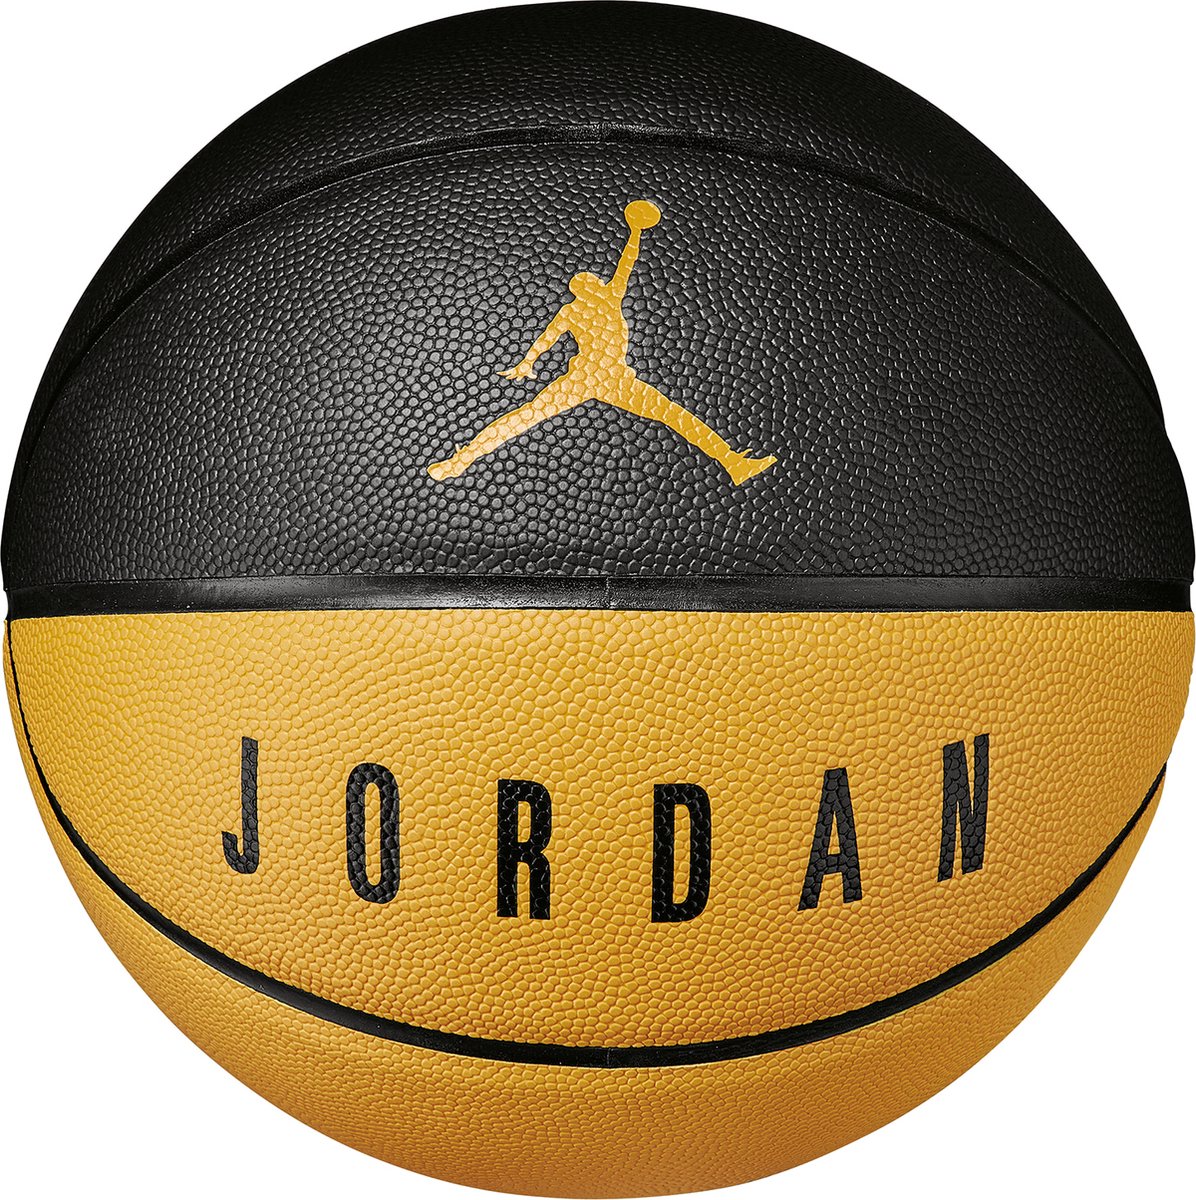 Jordan Basketbal model Ultimate - Geel/Zwart - Maat 7